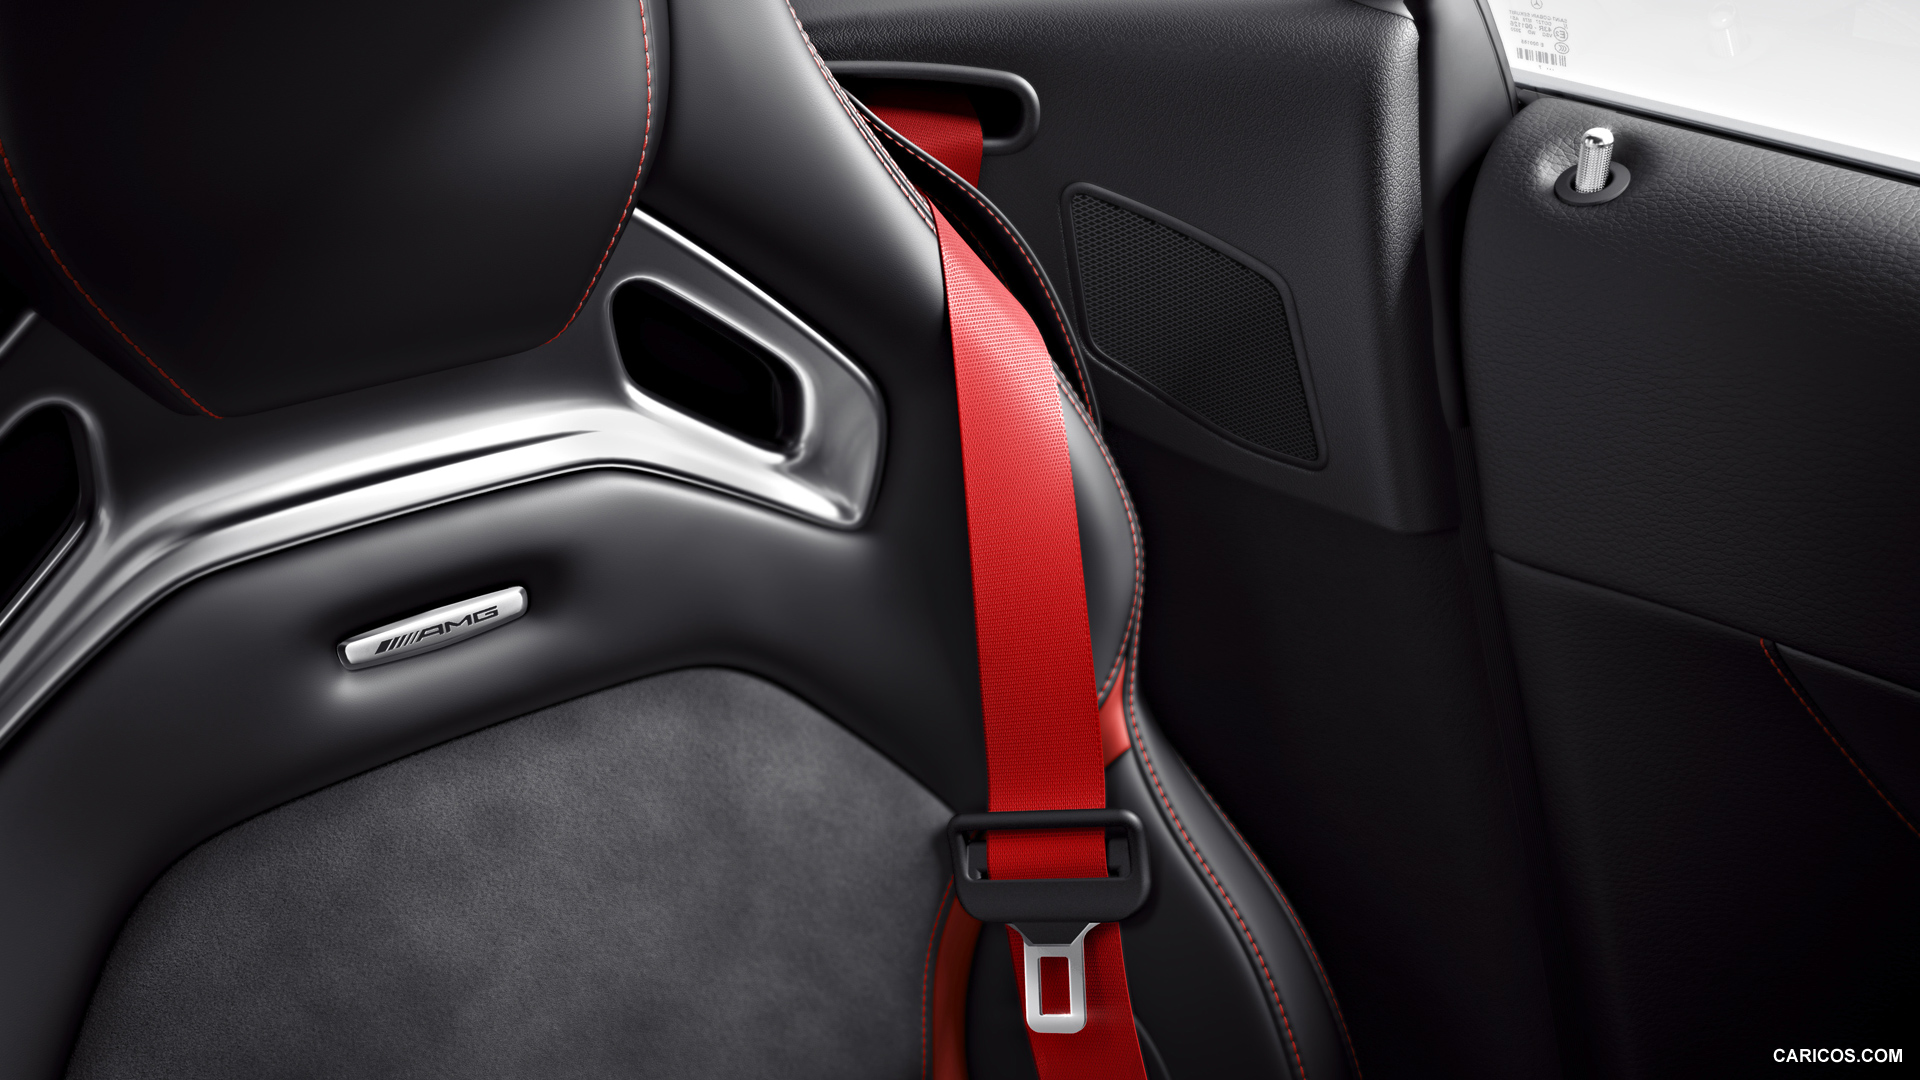  - AMG Performance Seats (Nappa Leather / DINAMICA Microfibre Black) - Interior, #10 of 13